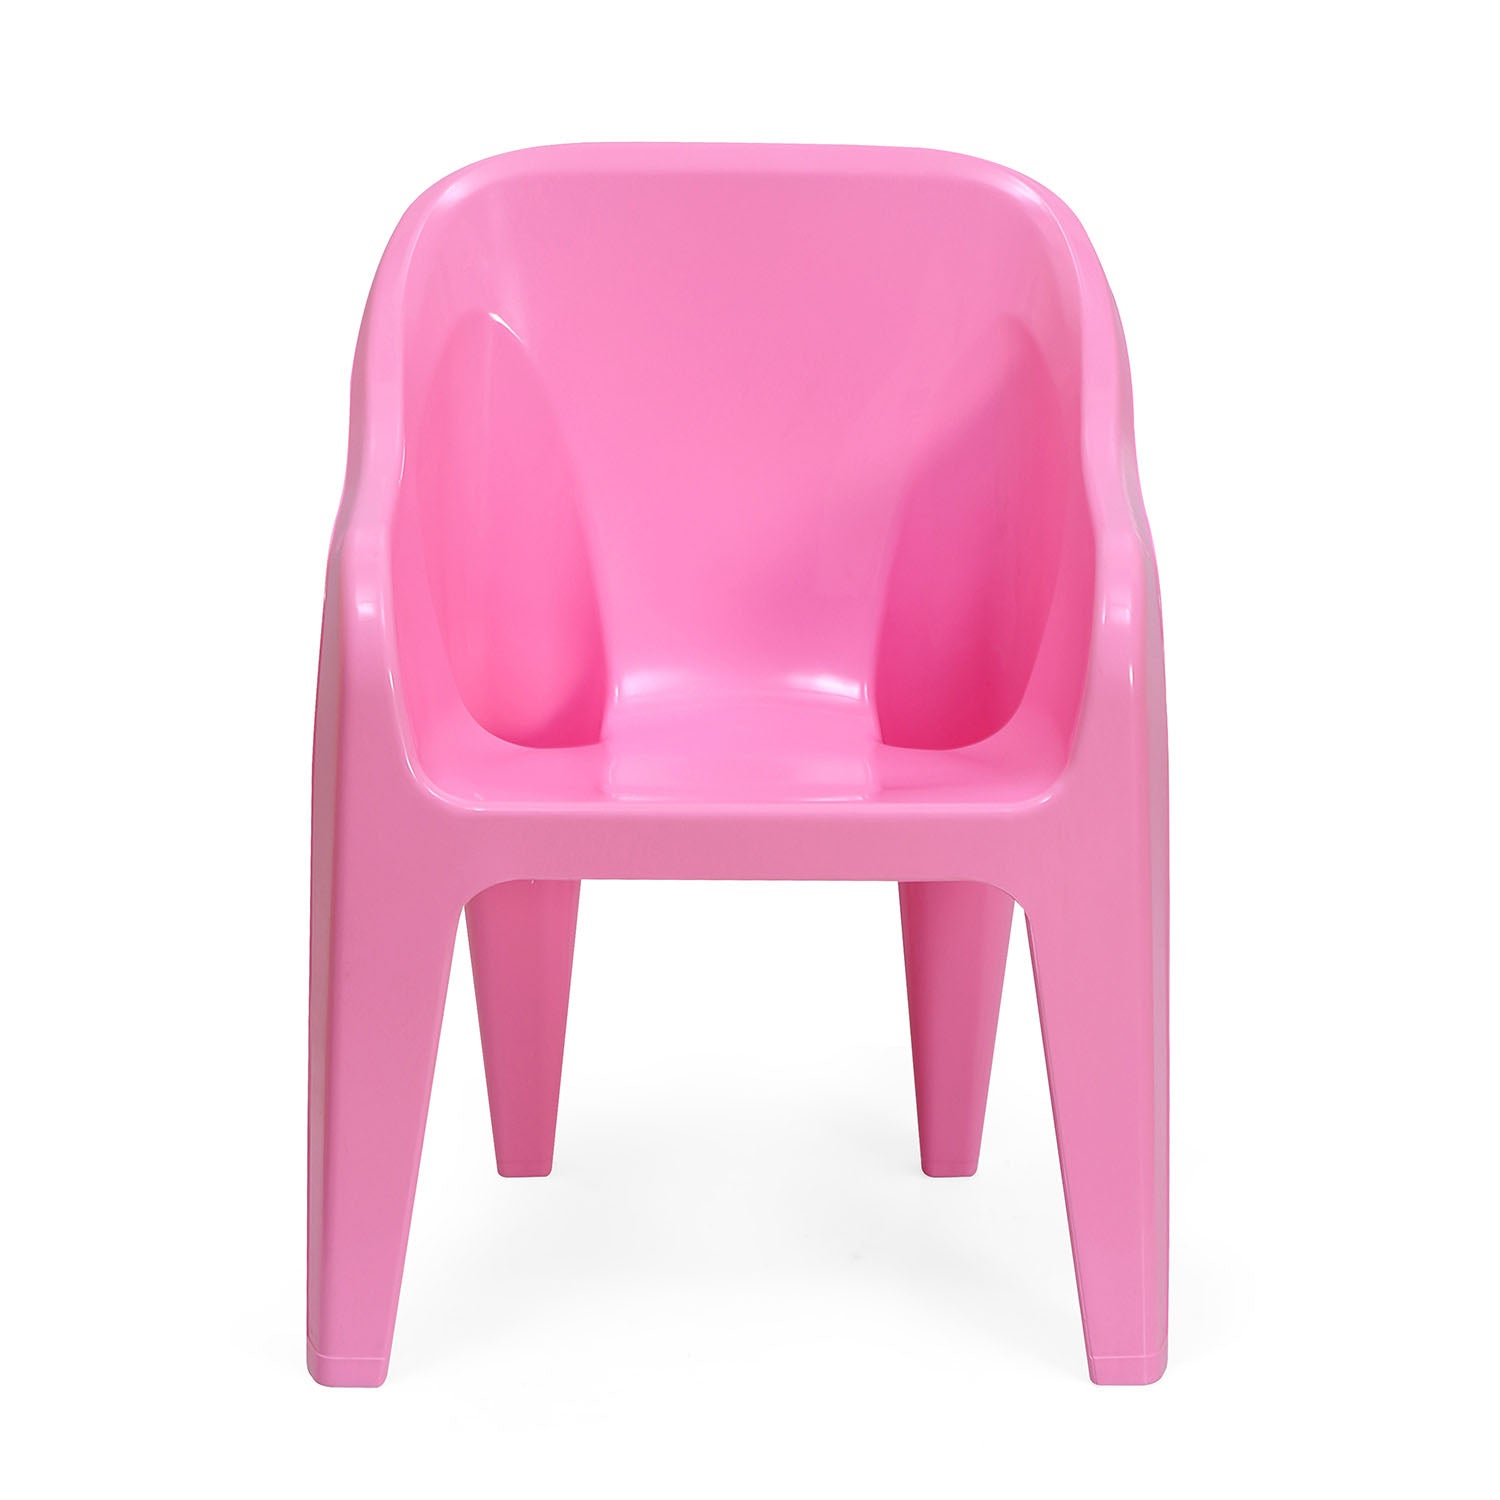 Nilkamal Eeezy go Baby Kids Chair (Fairy Pink)